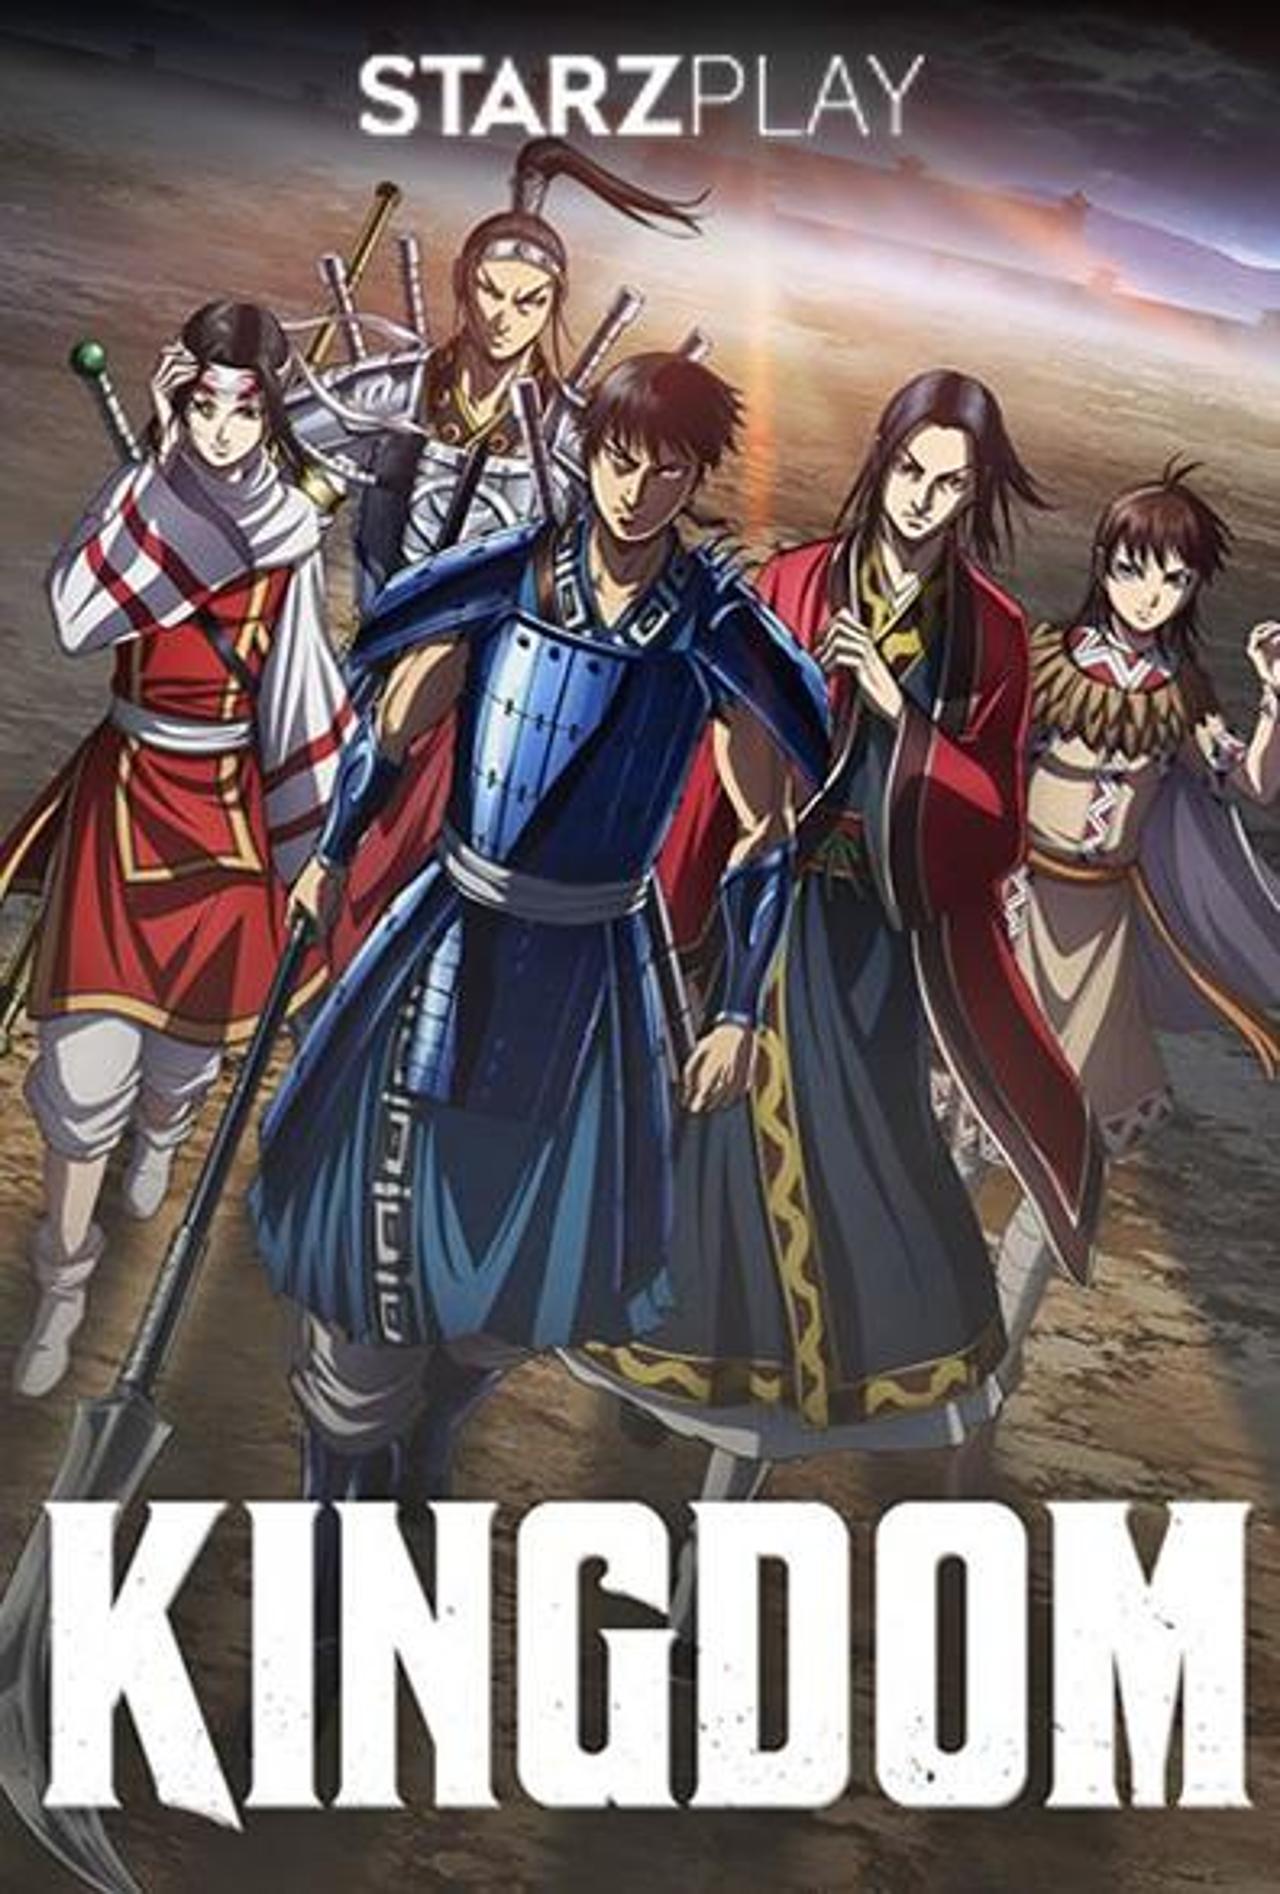 Should I watch the anime Kingdom? - Quora